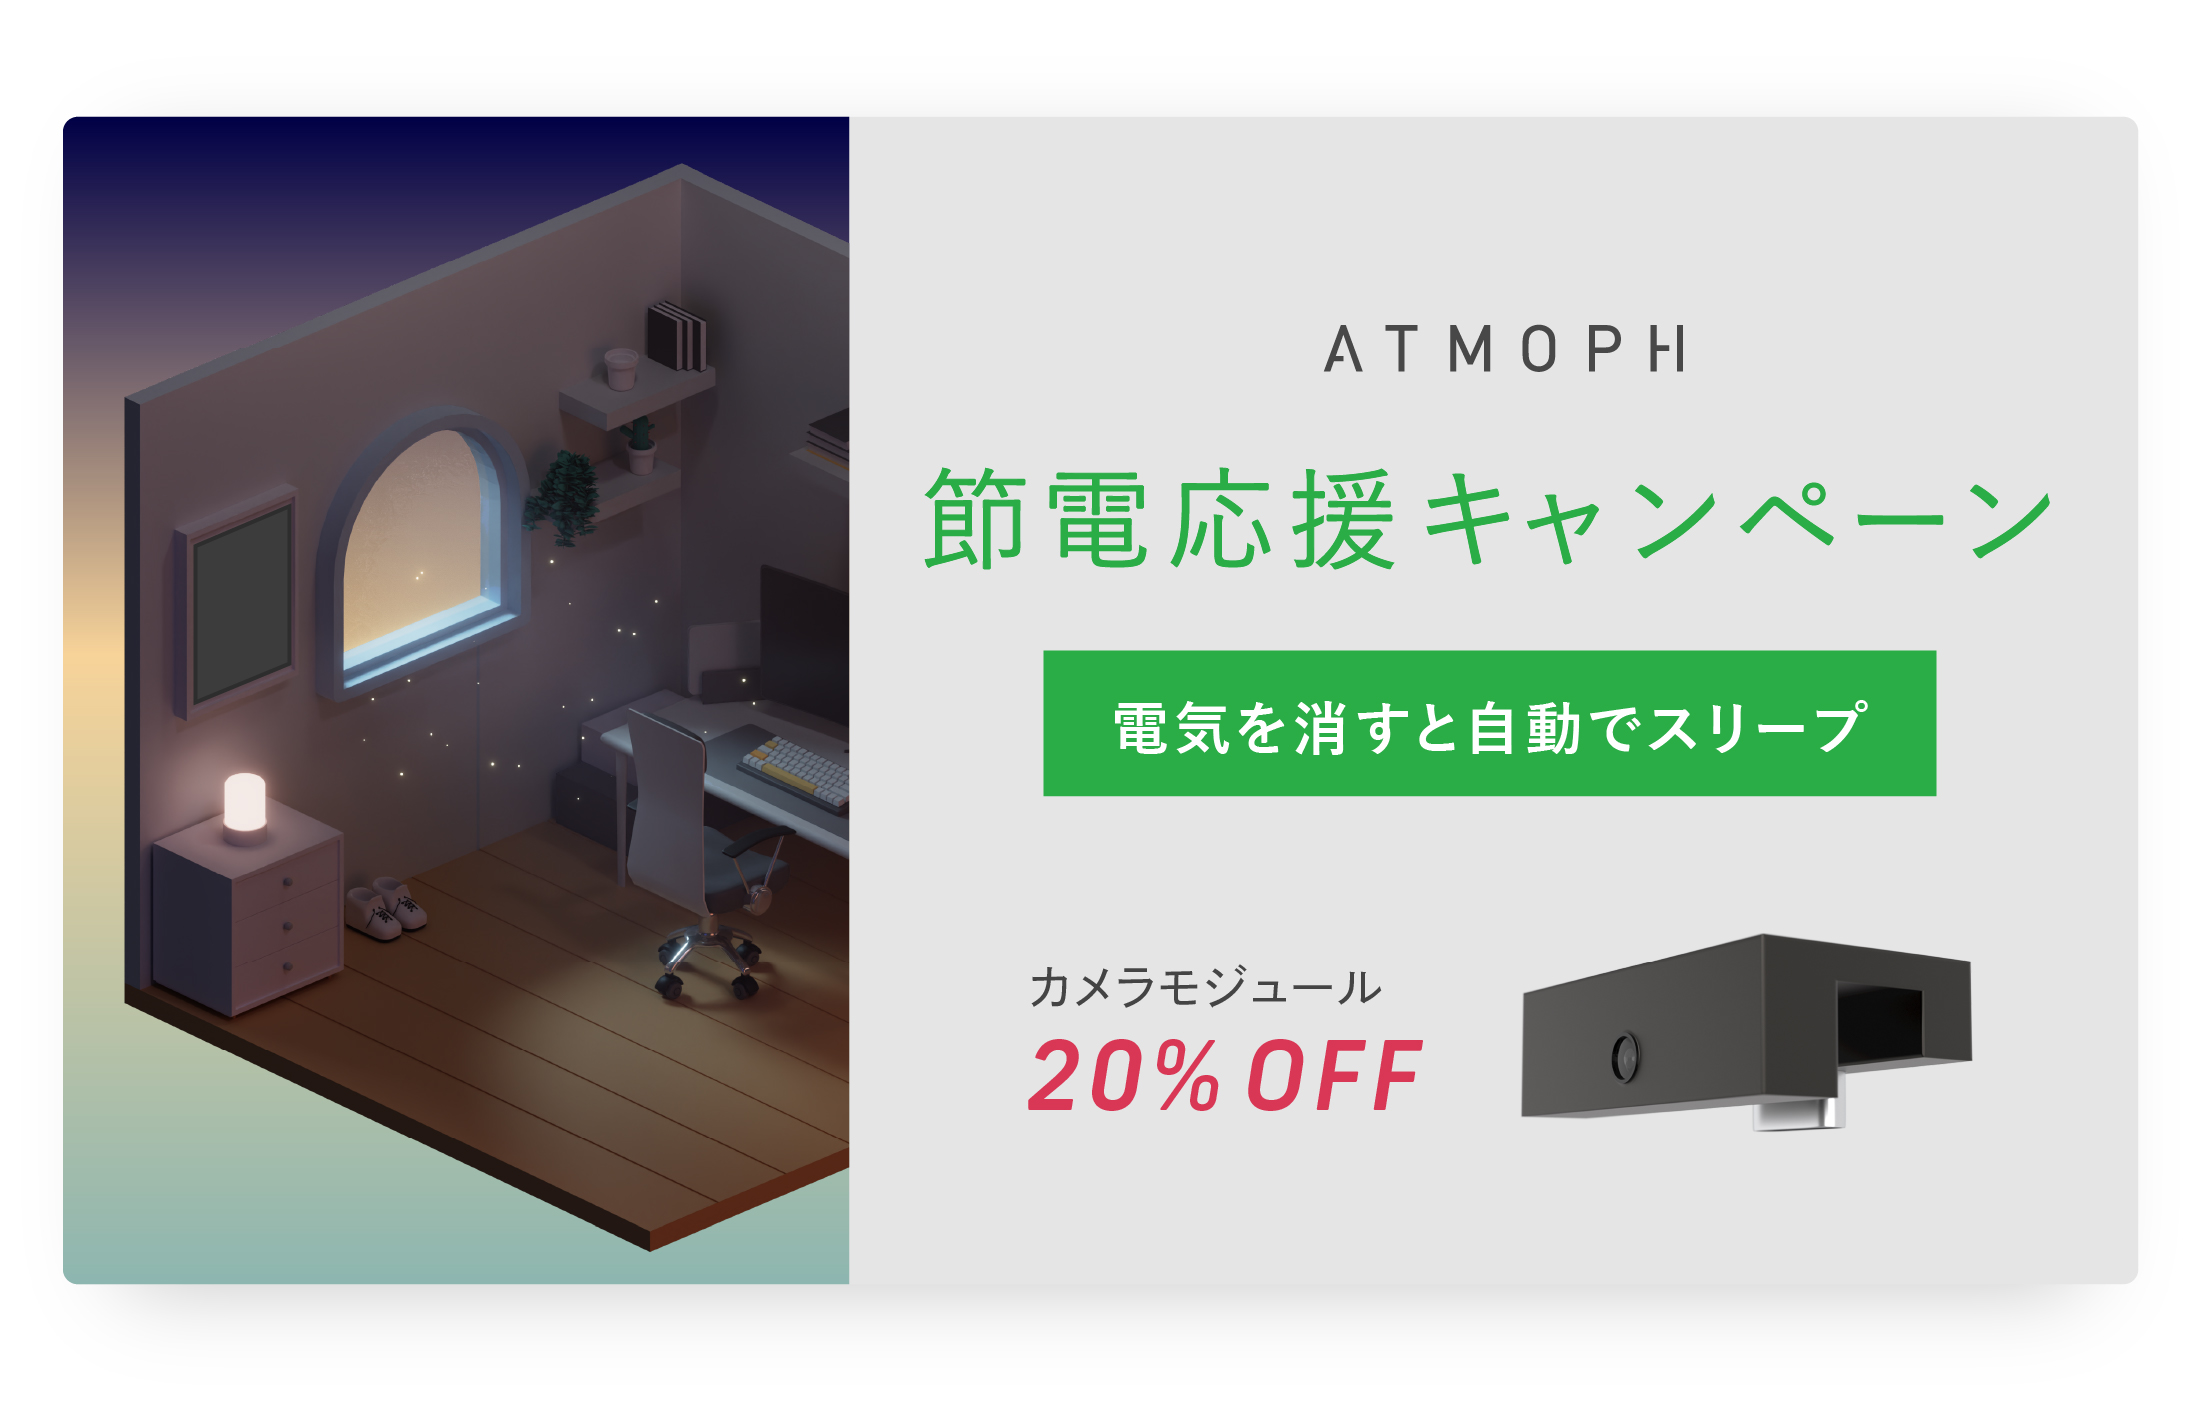 Atmoph Window 2 LED Light Camera Module変更いたします